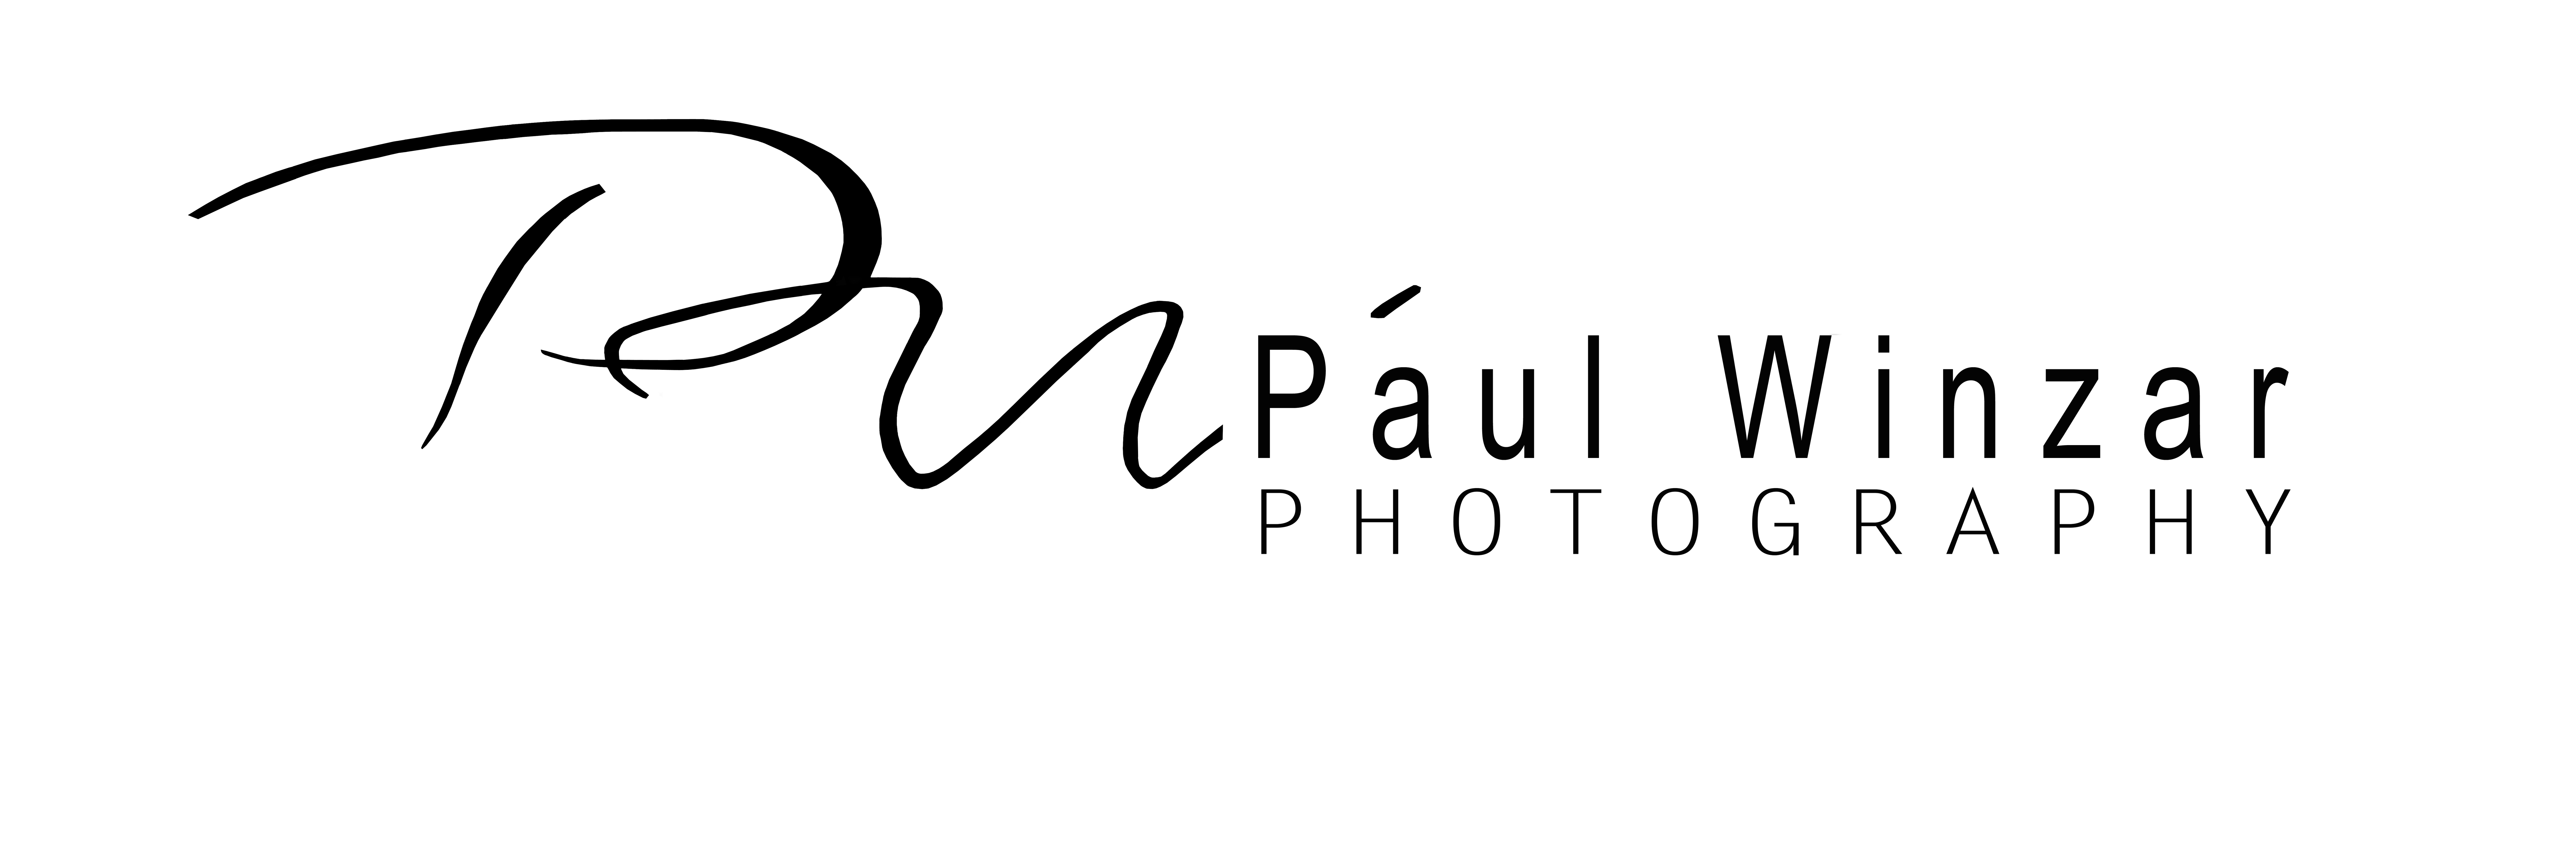 Paul Winzar Photography